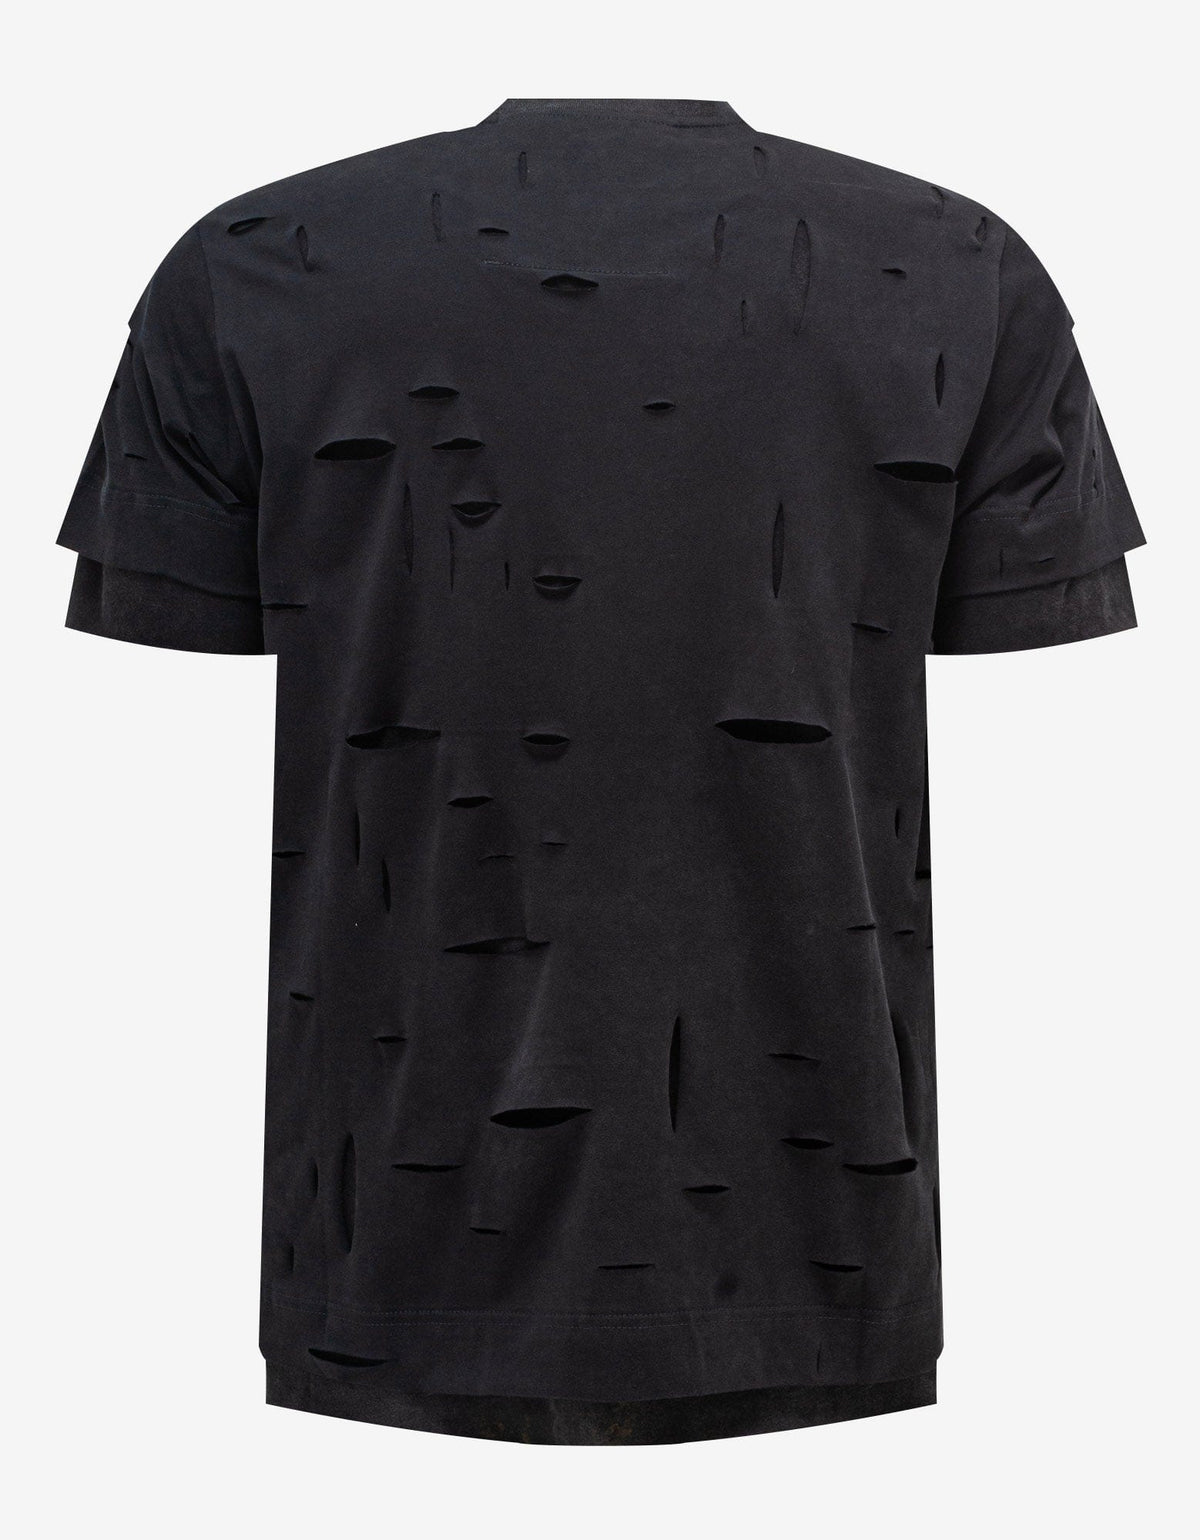 Givenchy Black Archetype Logo Destroyed T-Shirt